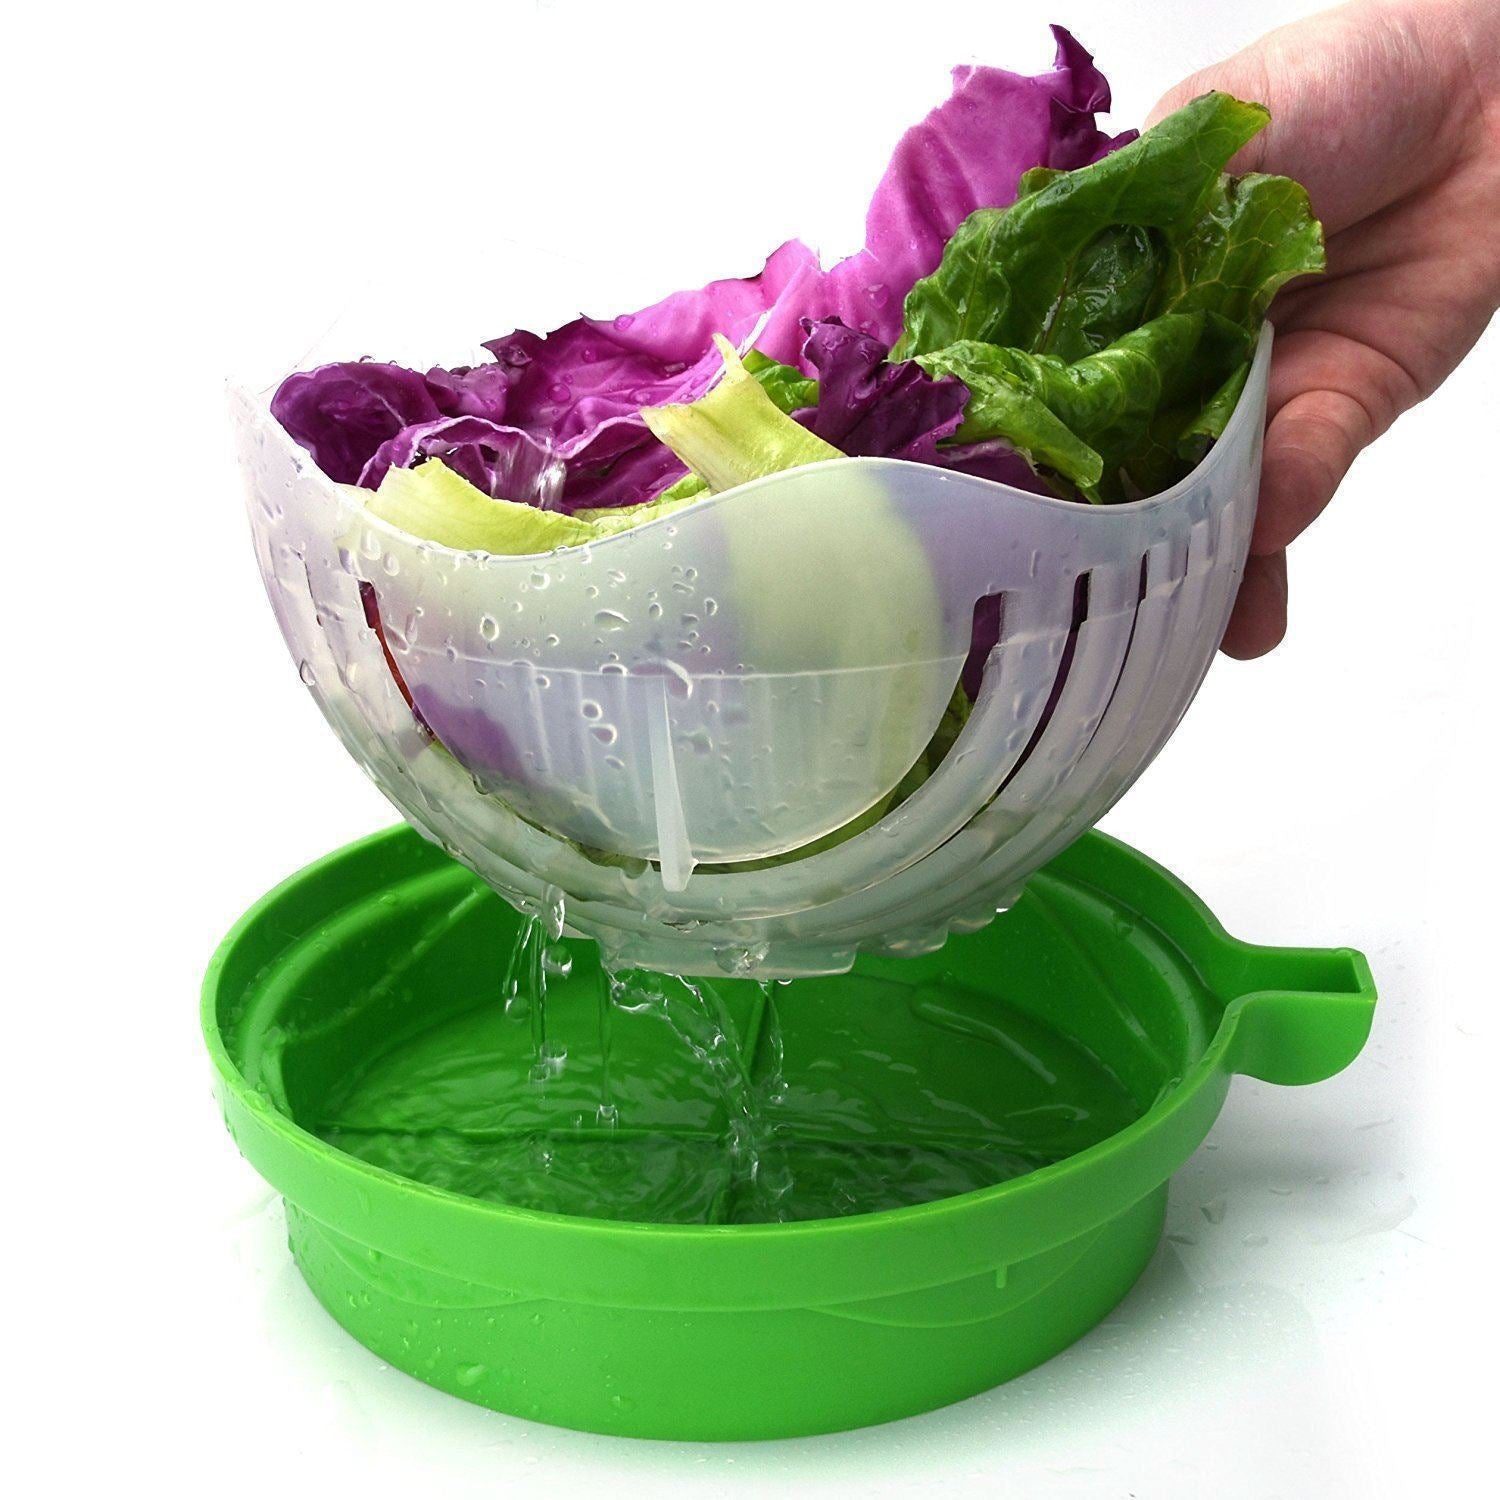 Hirundo Upgraded Salad Cutter Bowl, Green